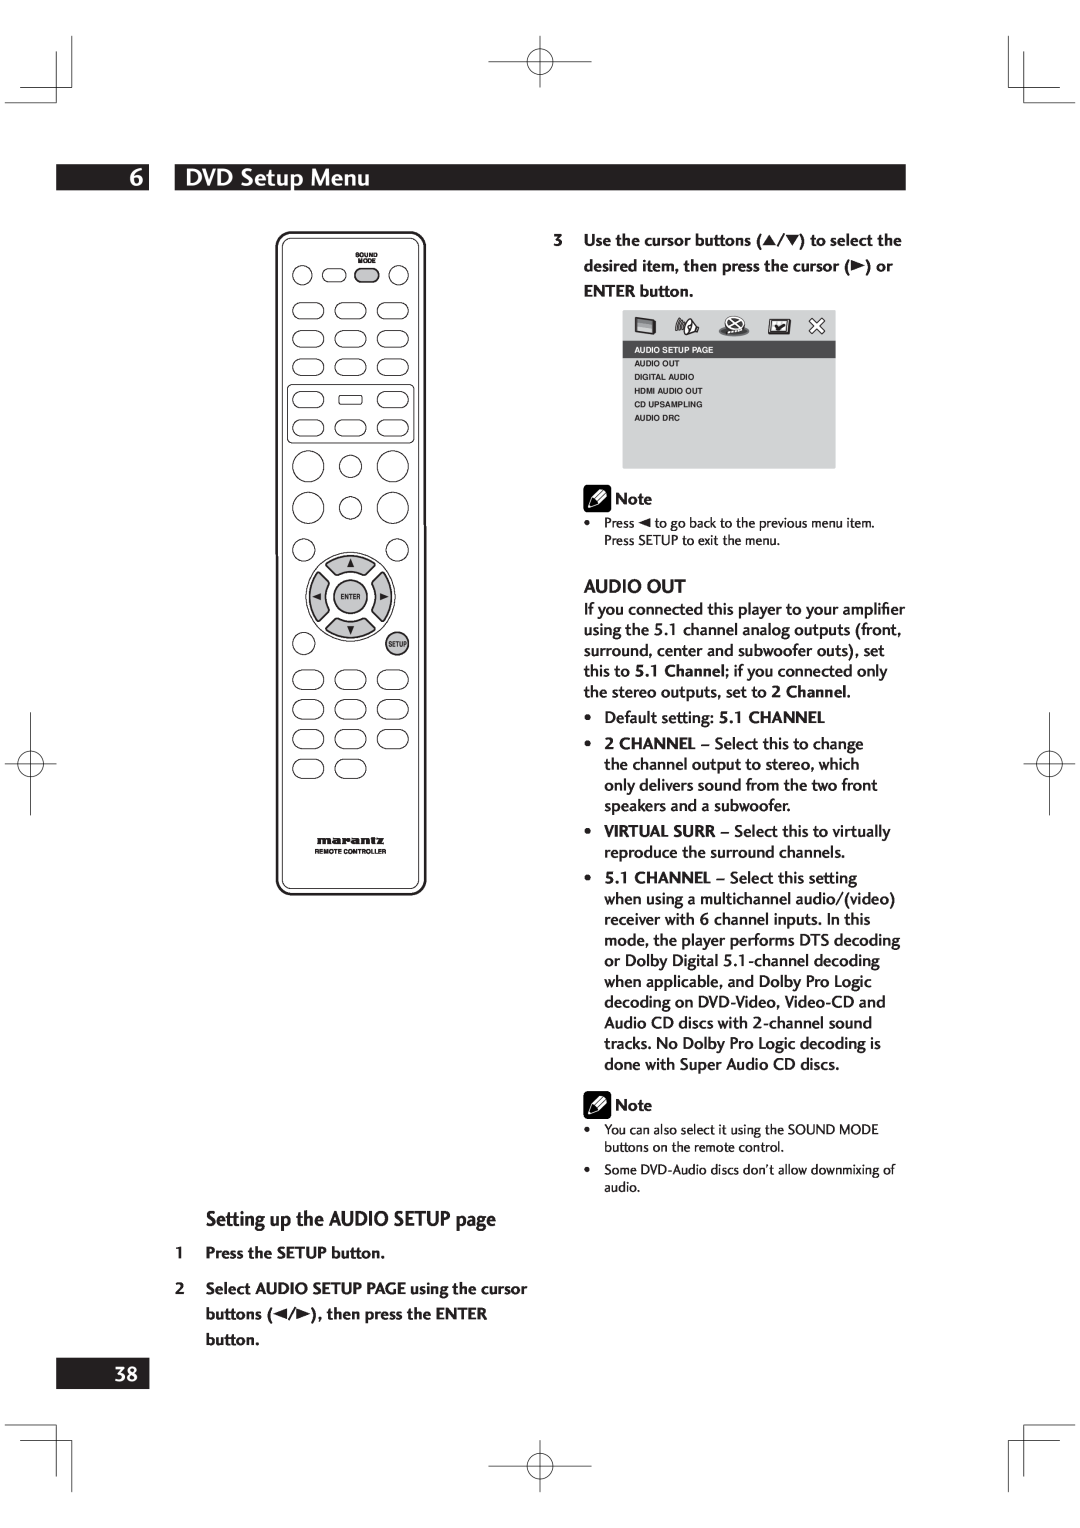 Marantz VC6001 manual Setting up the AUDIO SETUP page, Audio Out, Press the SETUP button, DVD Setup Menu, ENTER button 